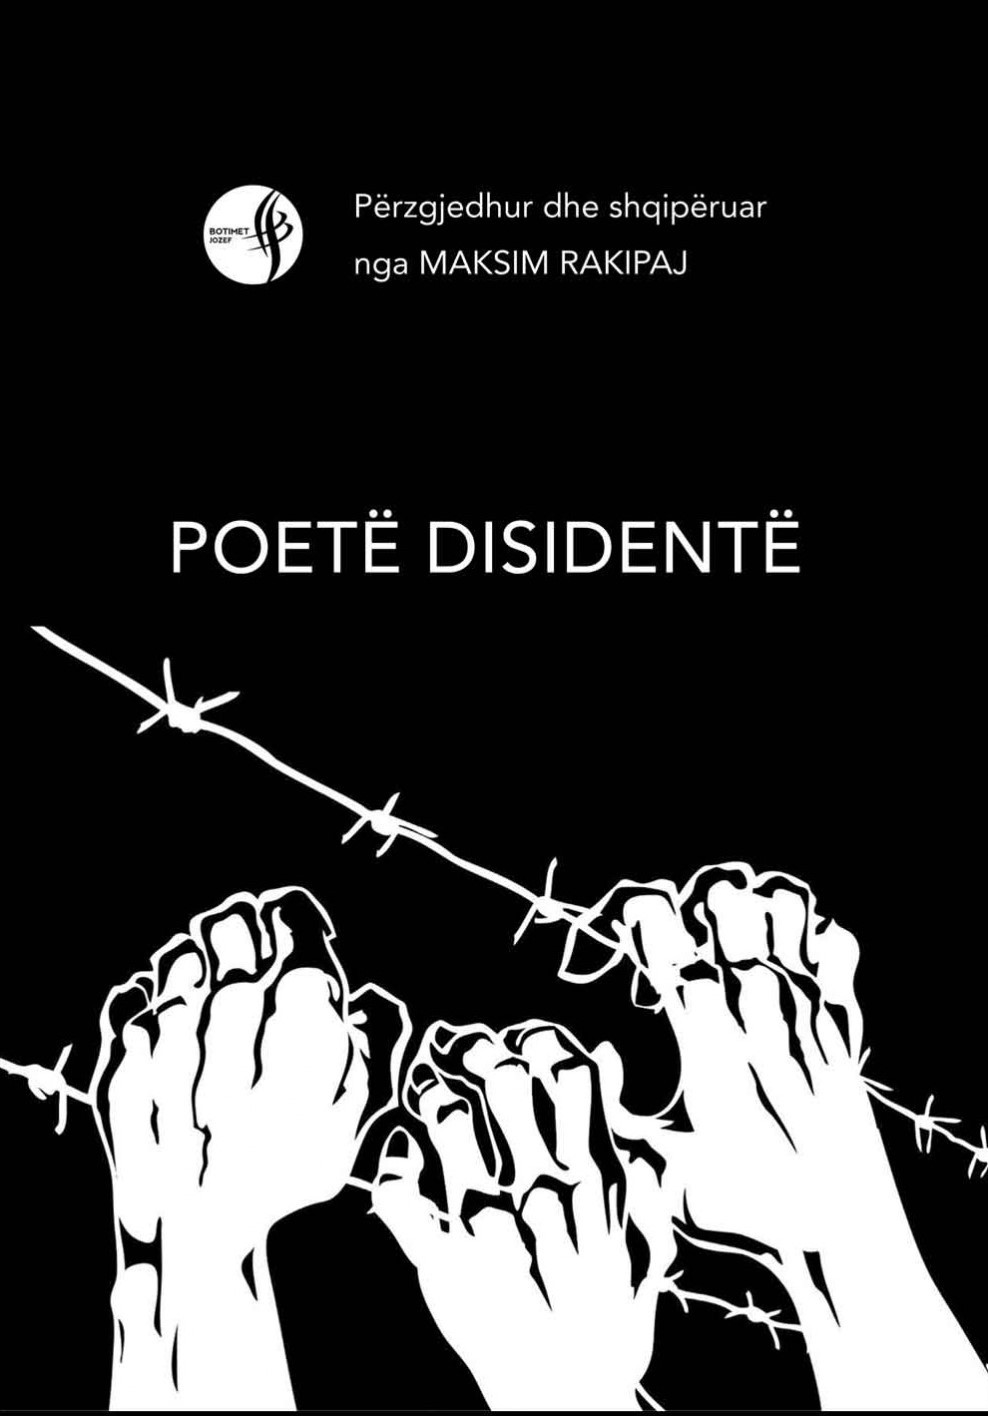 Poete disidente